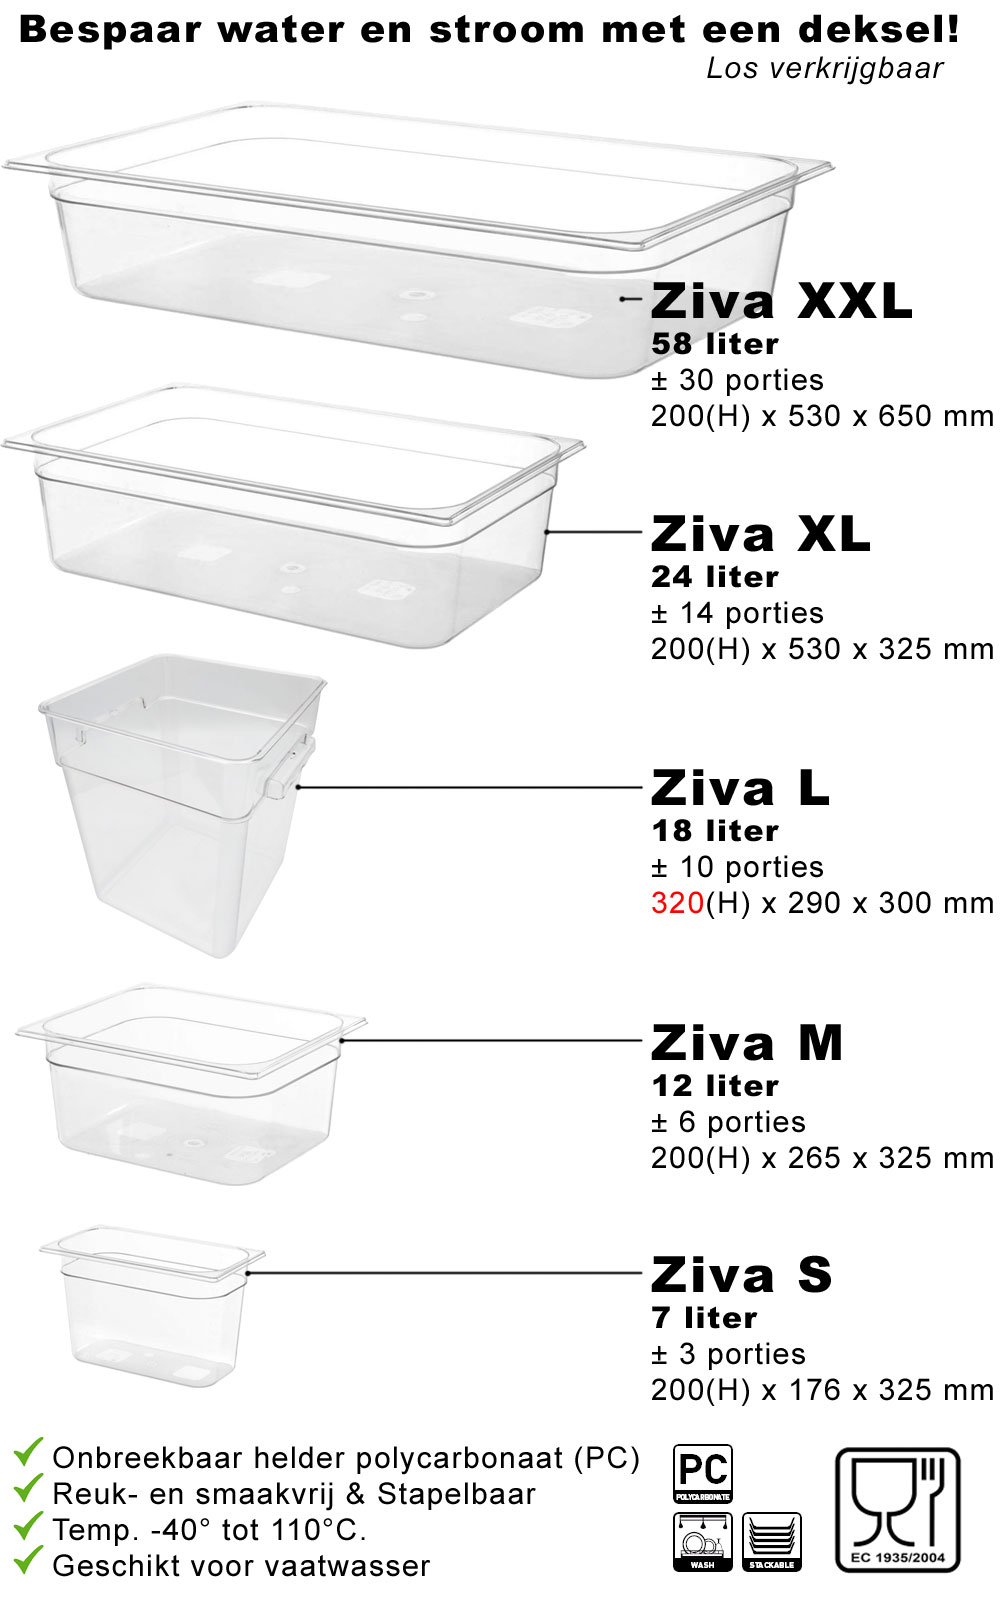 Wartmann 1507 (1300W) + Ziva OneTouch + 7 liter container package